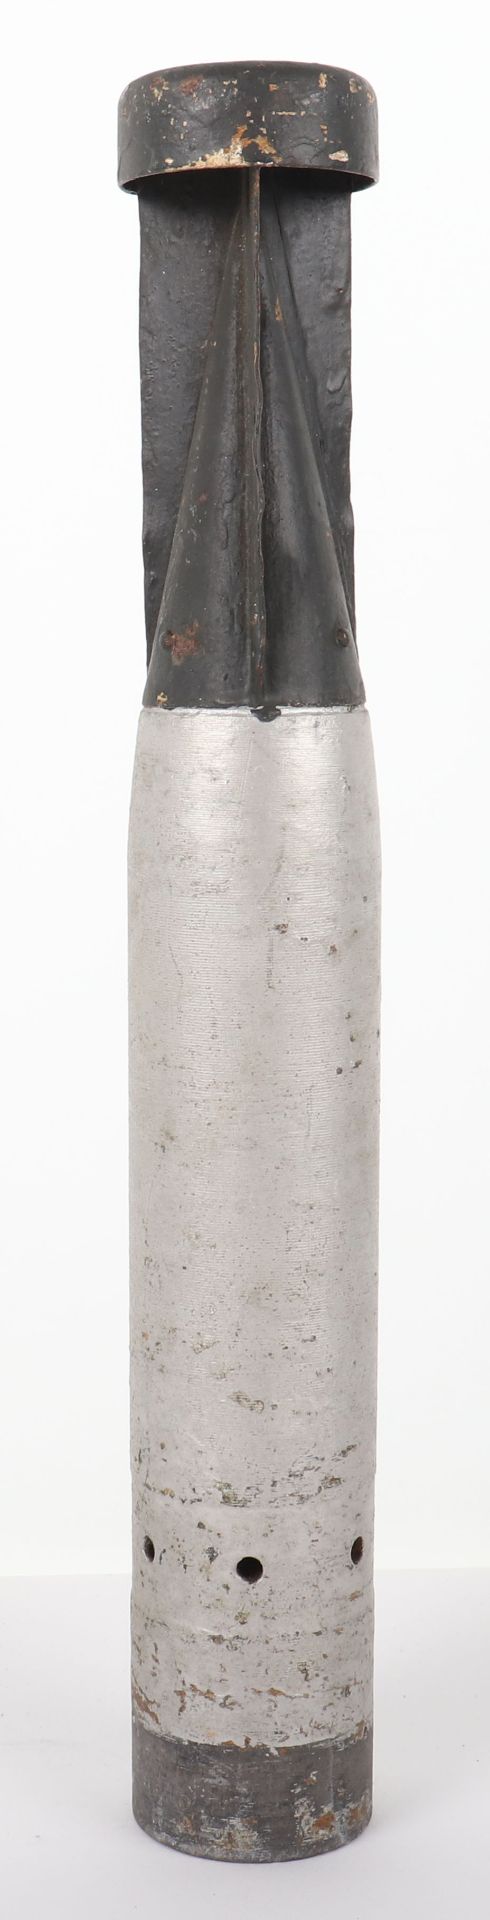 Inert WW2 German Incendiary Bomb - Image 3 of 6